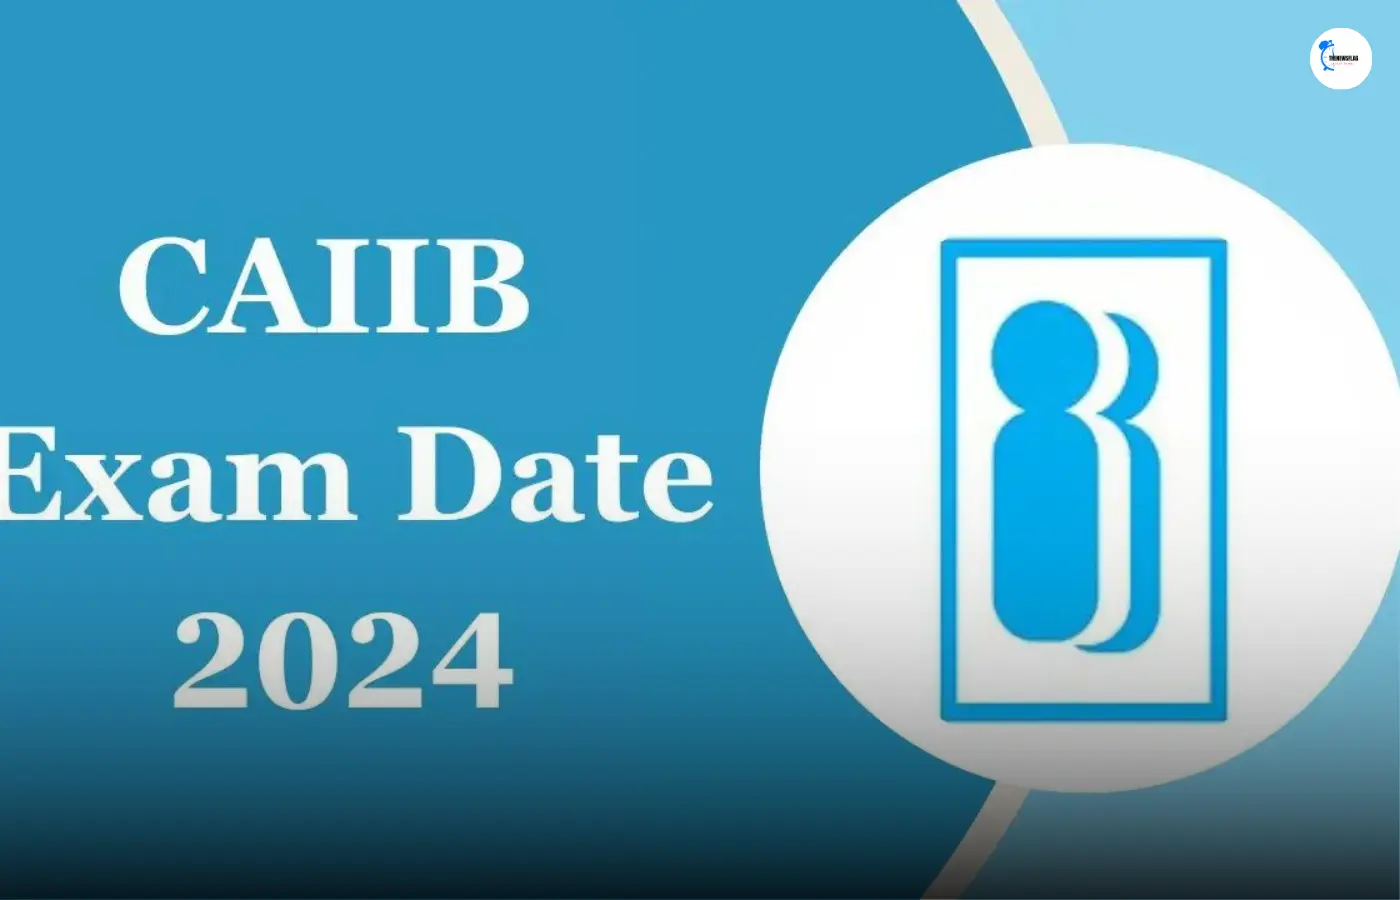 Exam Date of CAIIB Exam 2024